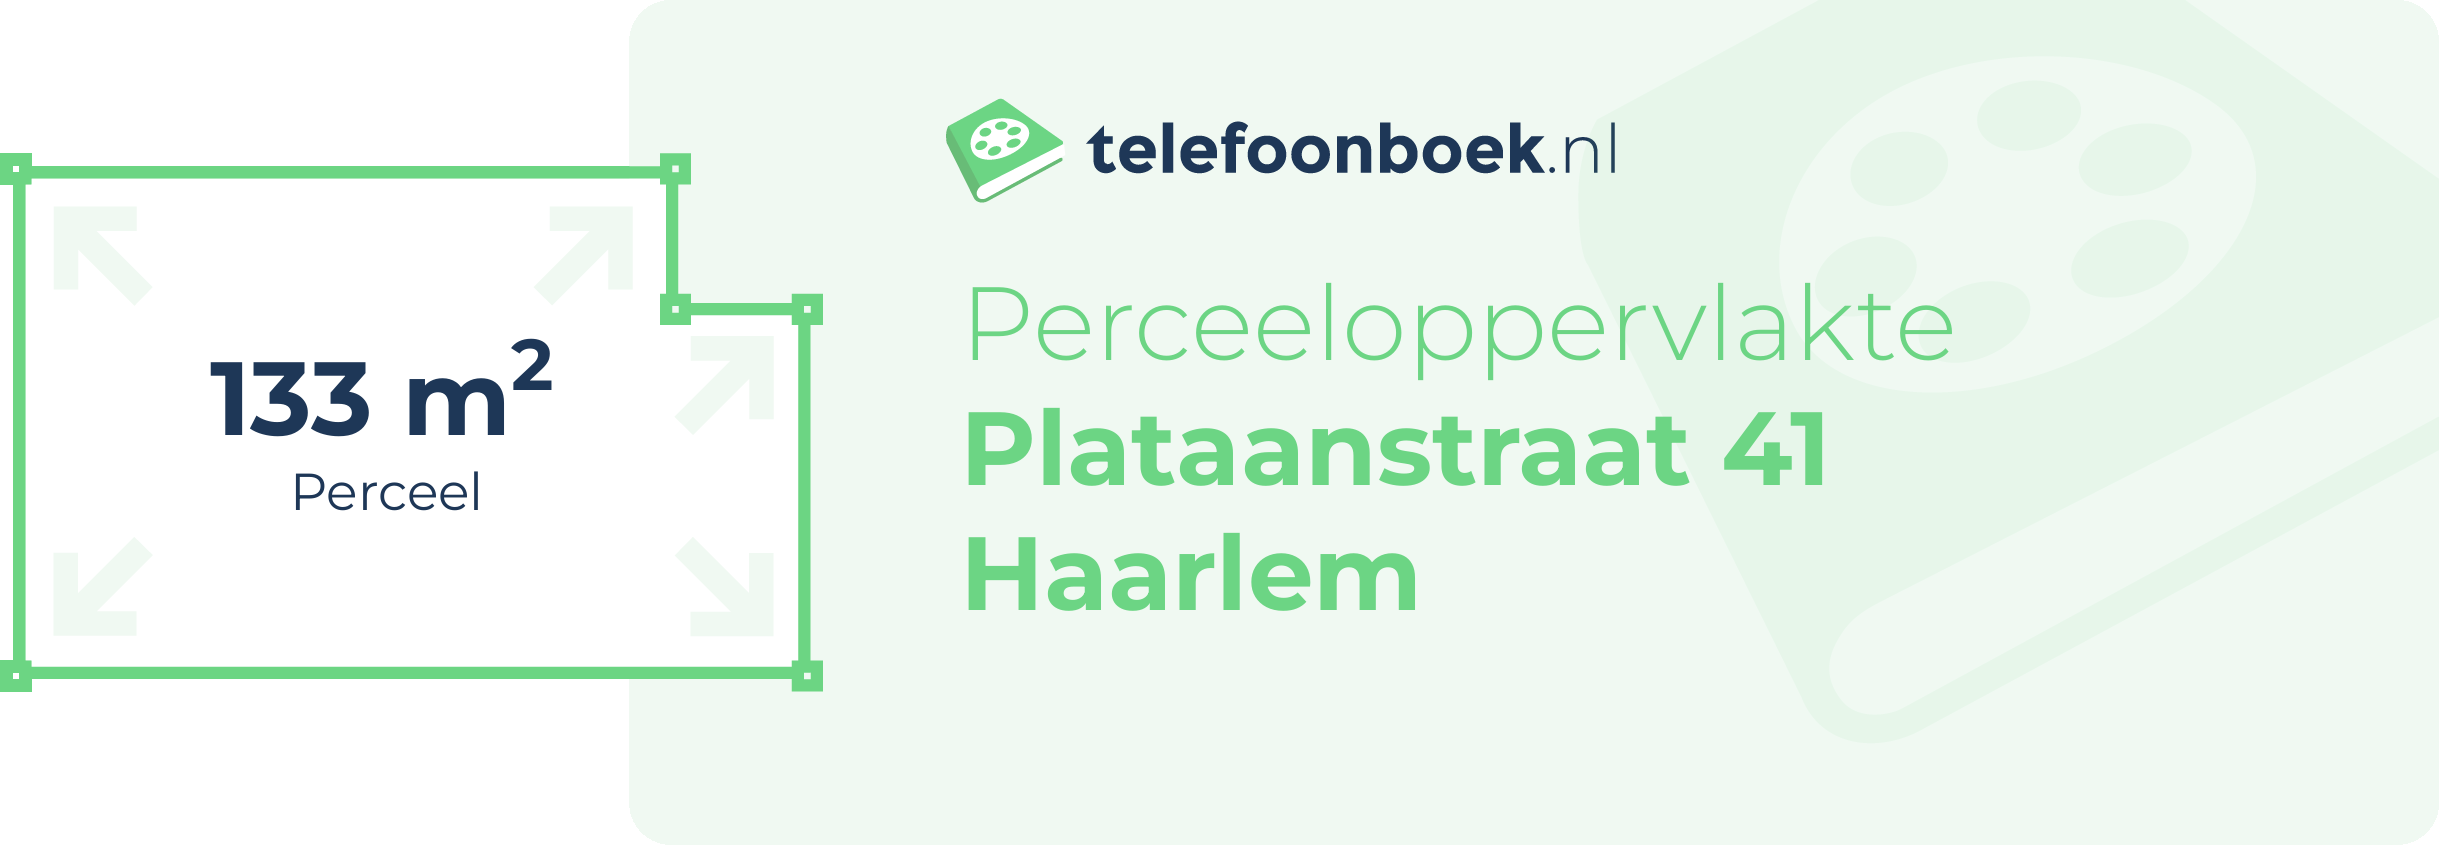 Perceeloppervlakte Plataanstraat 41 Haarlem